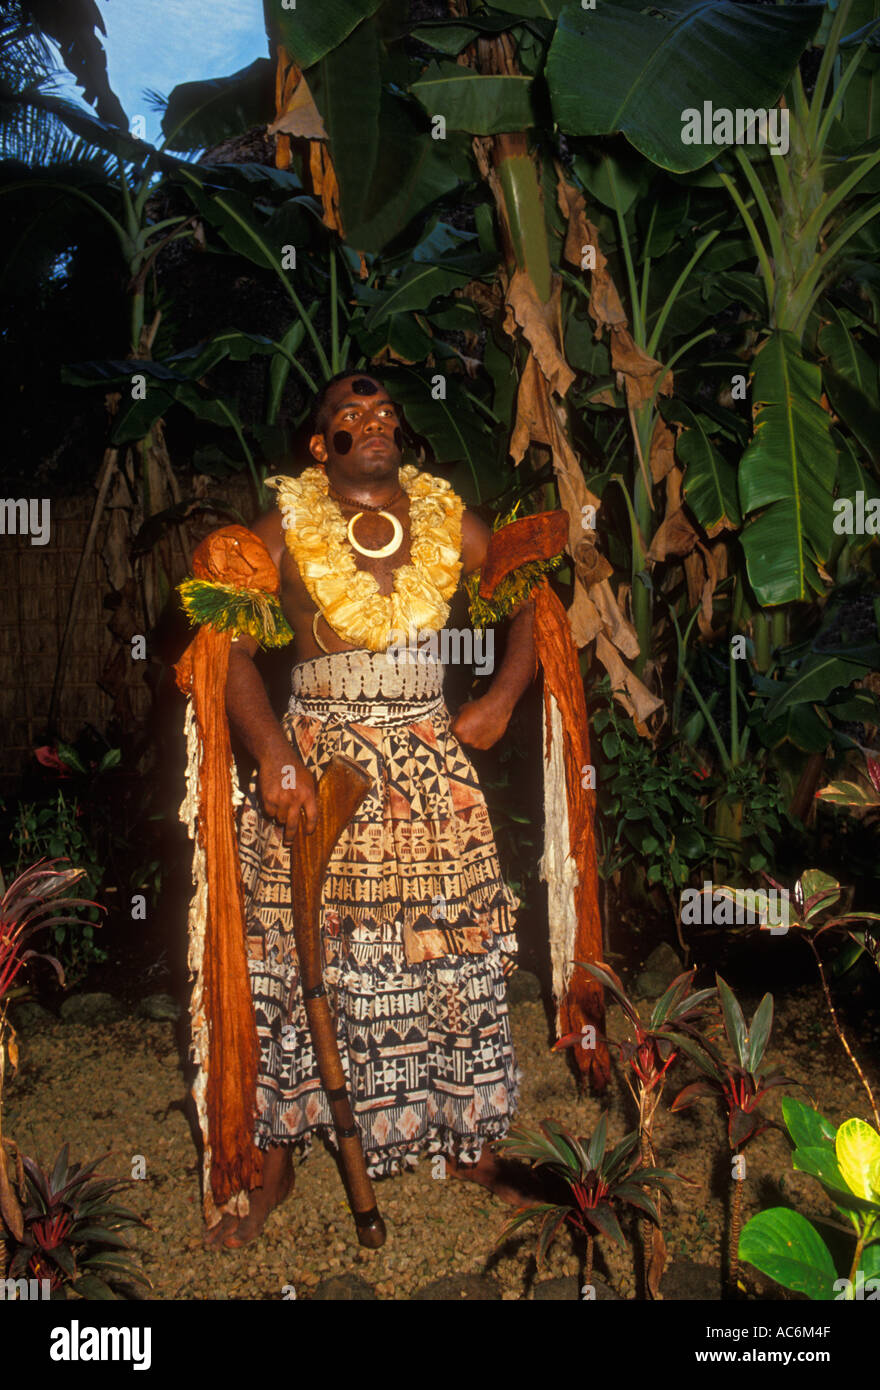 Fijian man, student, guide, chieftain, Fiji village, Polynesian Cultural Center, Laie, Oahu Island, Hawaii, United States Stock Photo